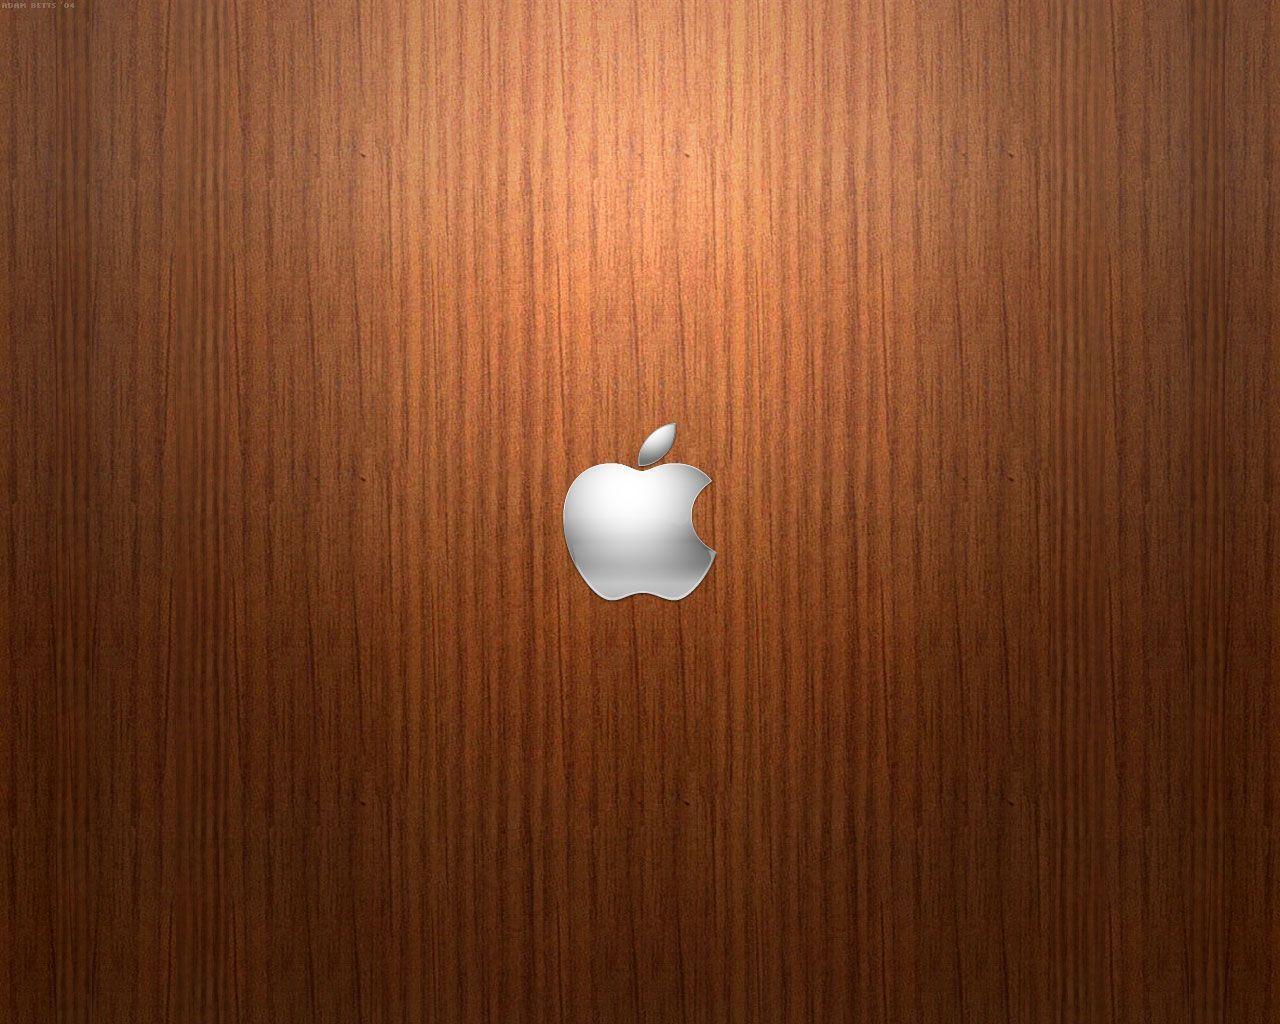 Apple Logo on Wood Background desktop wallpaper